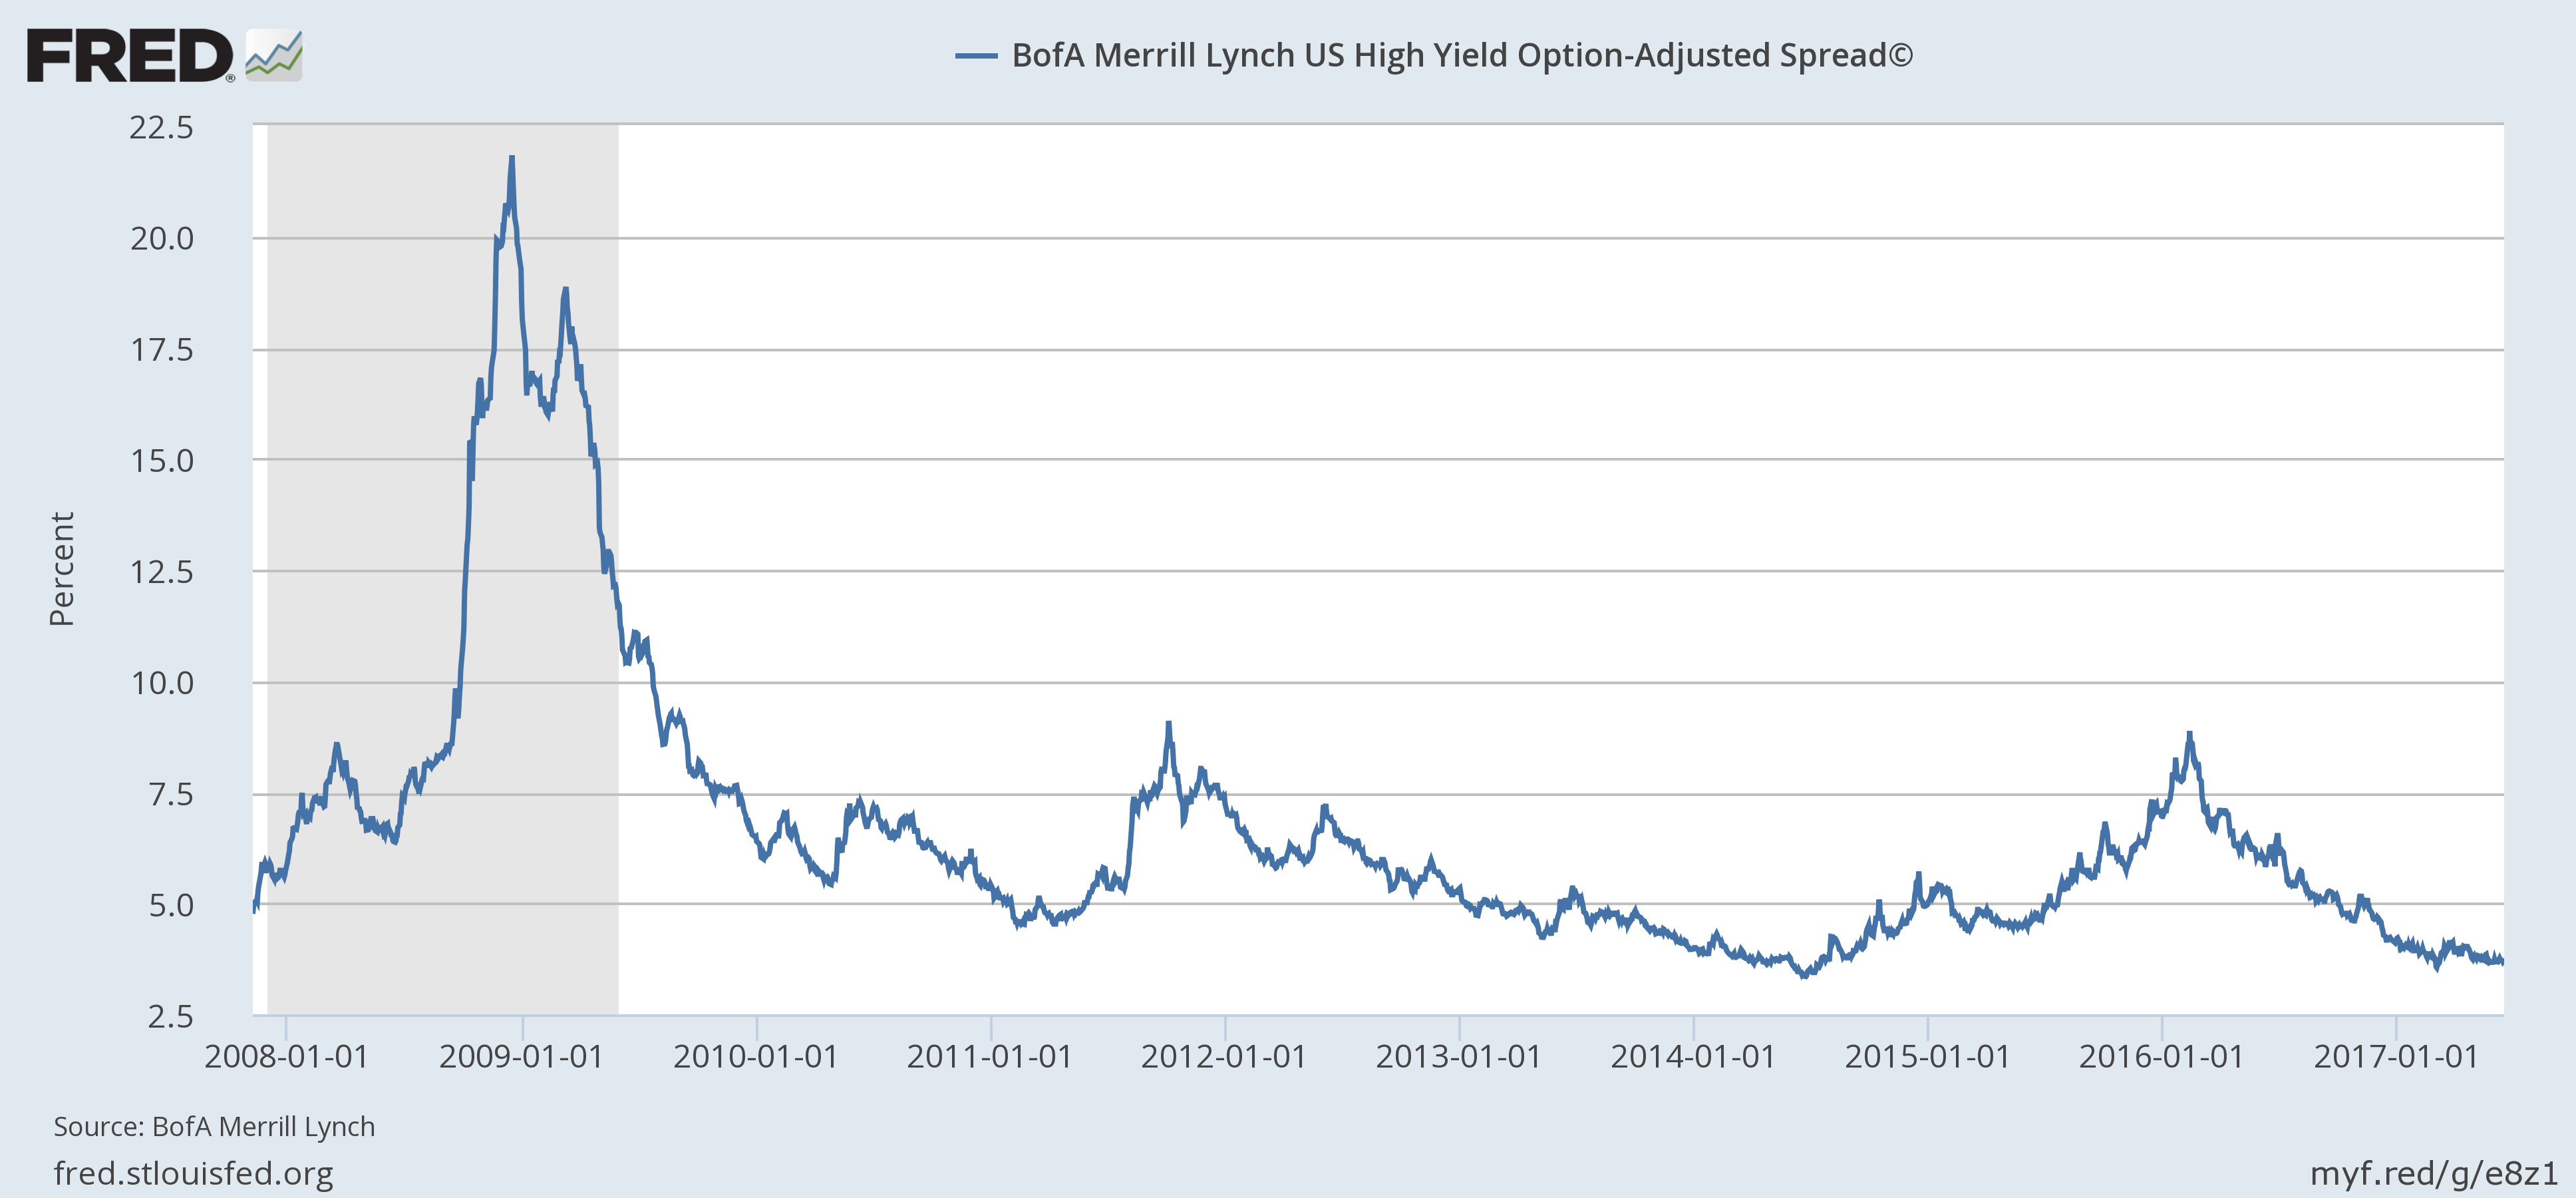 Merrill Lynch US High Yield Option-Adjusted Spread